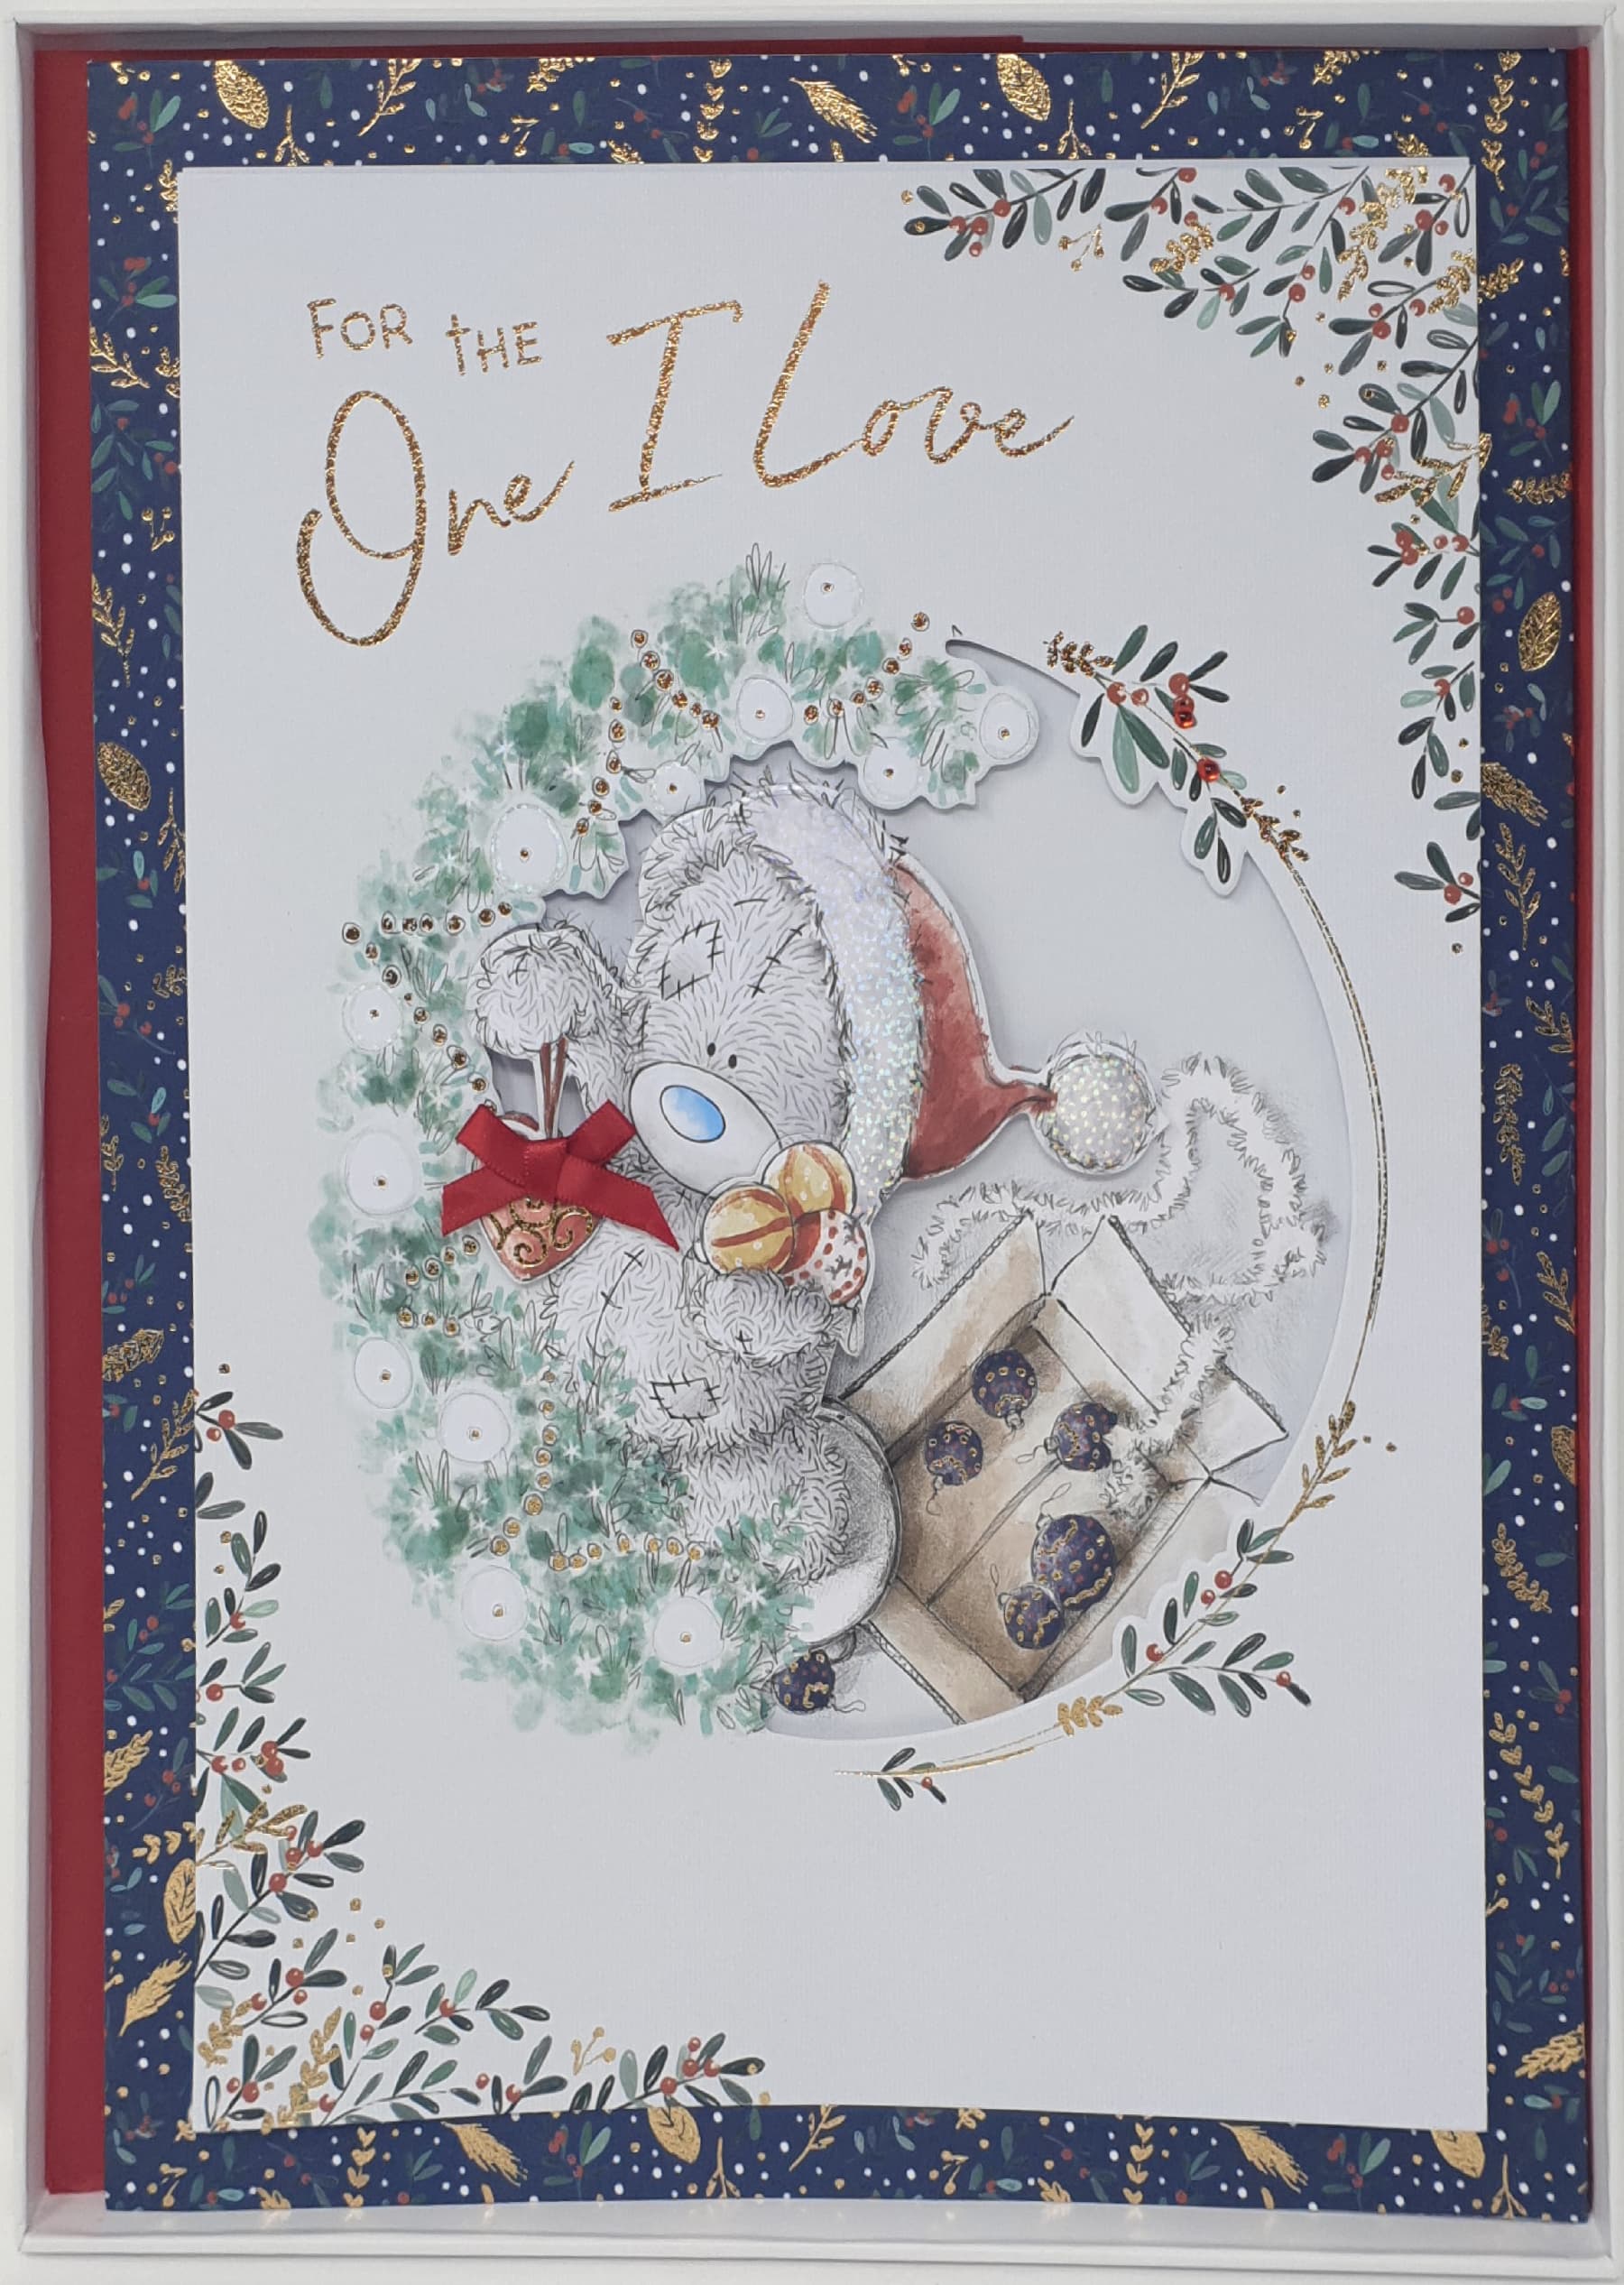 One I Love Christmas Card / Teddy Bear Decorating Garland (Card In A Presentation Box)